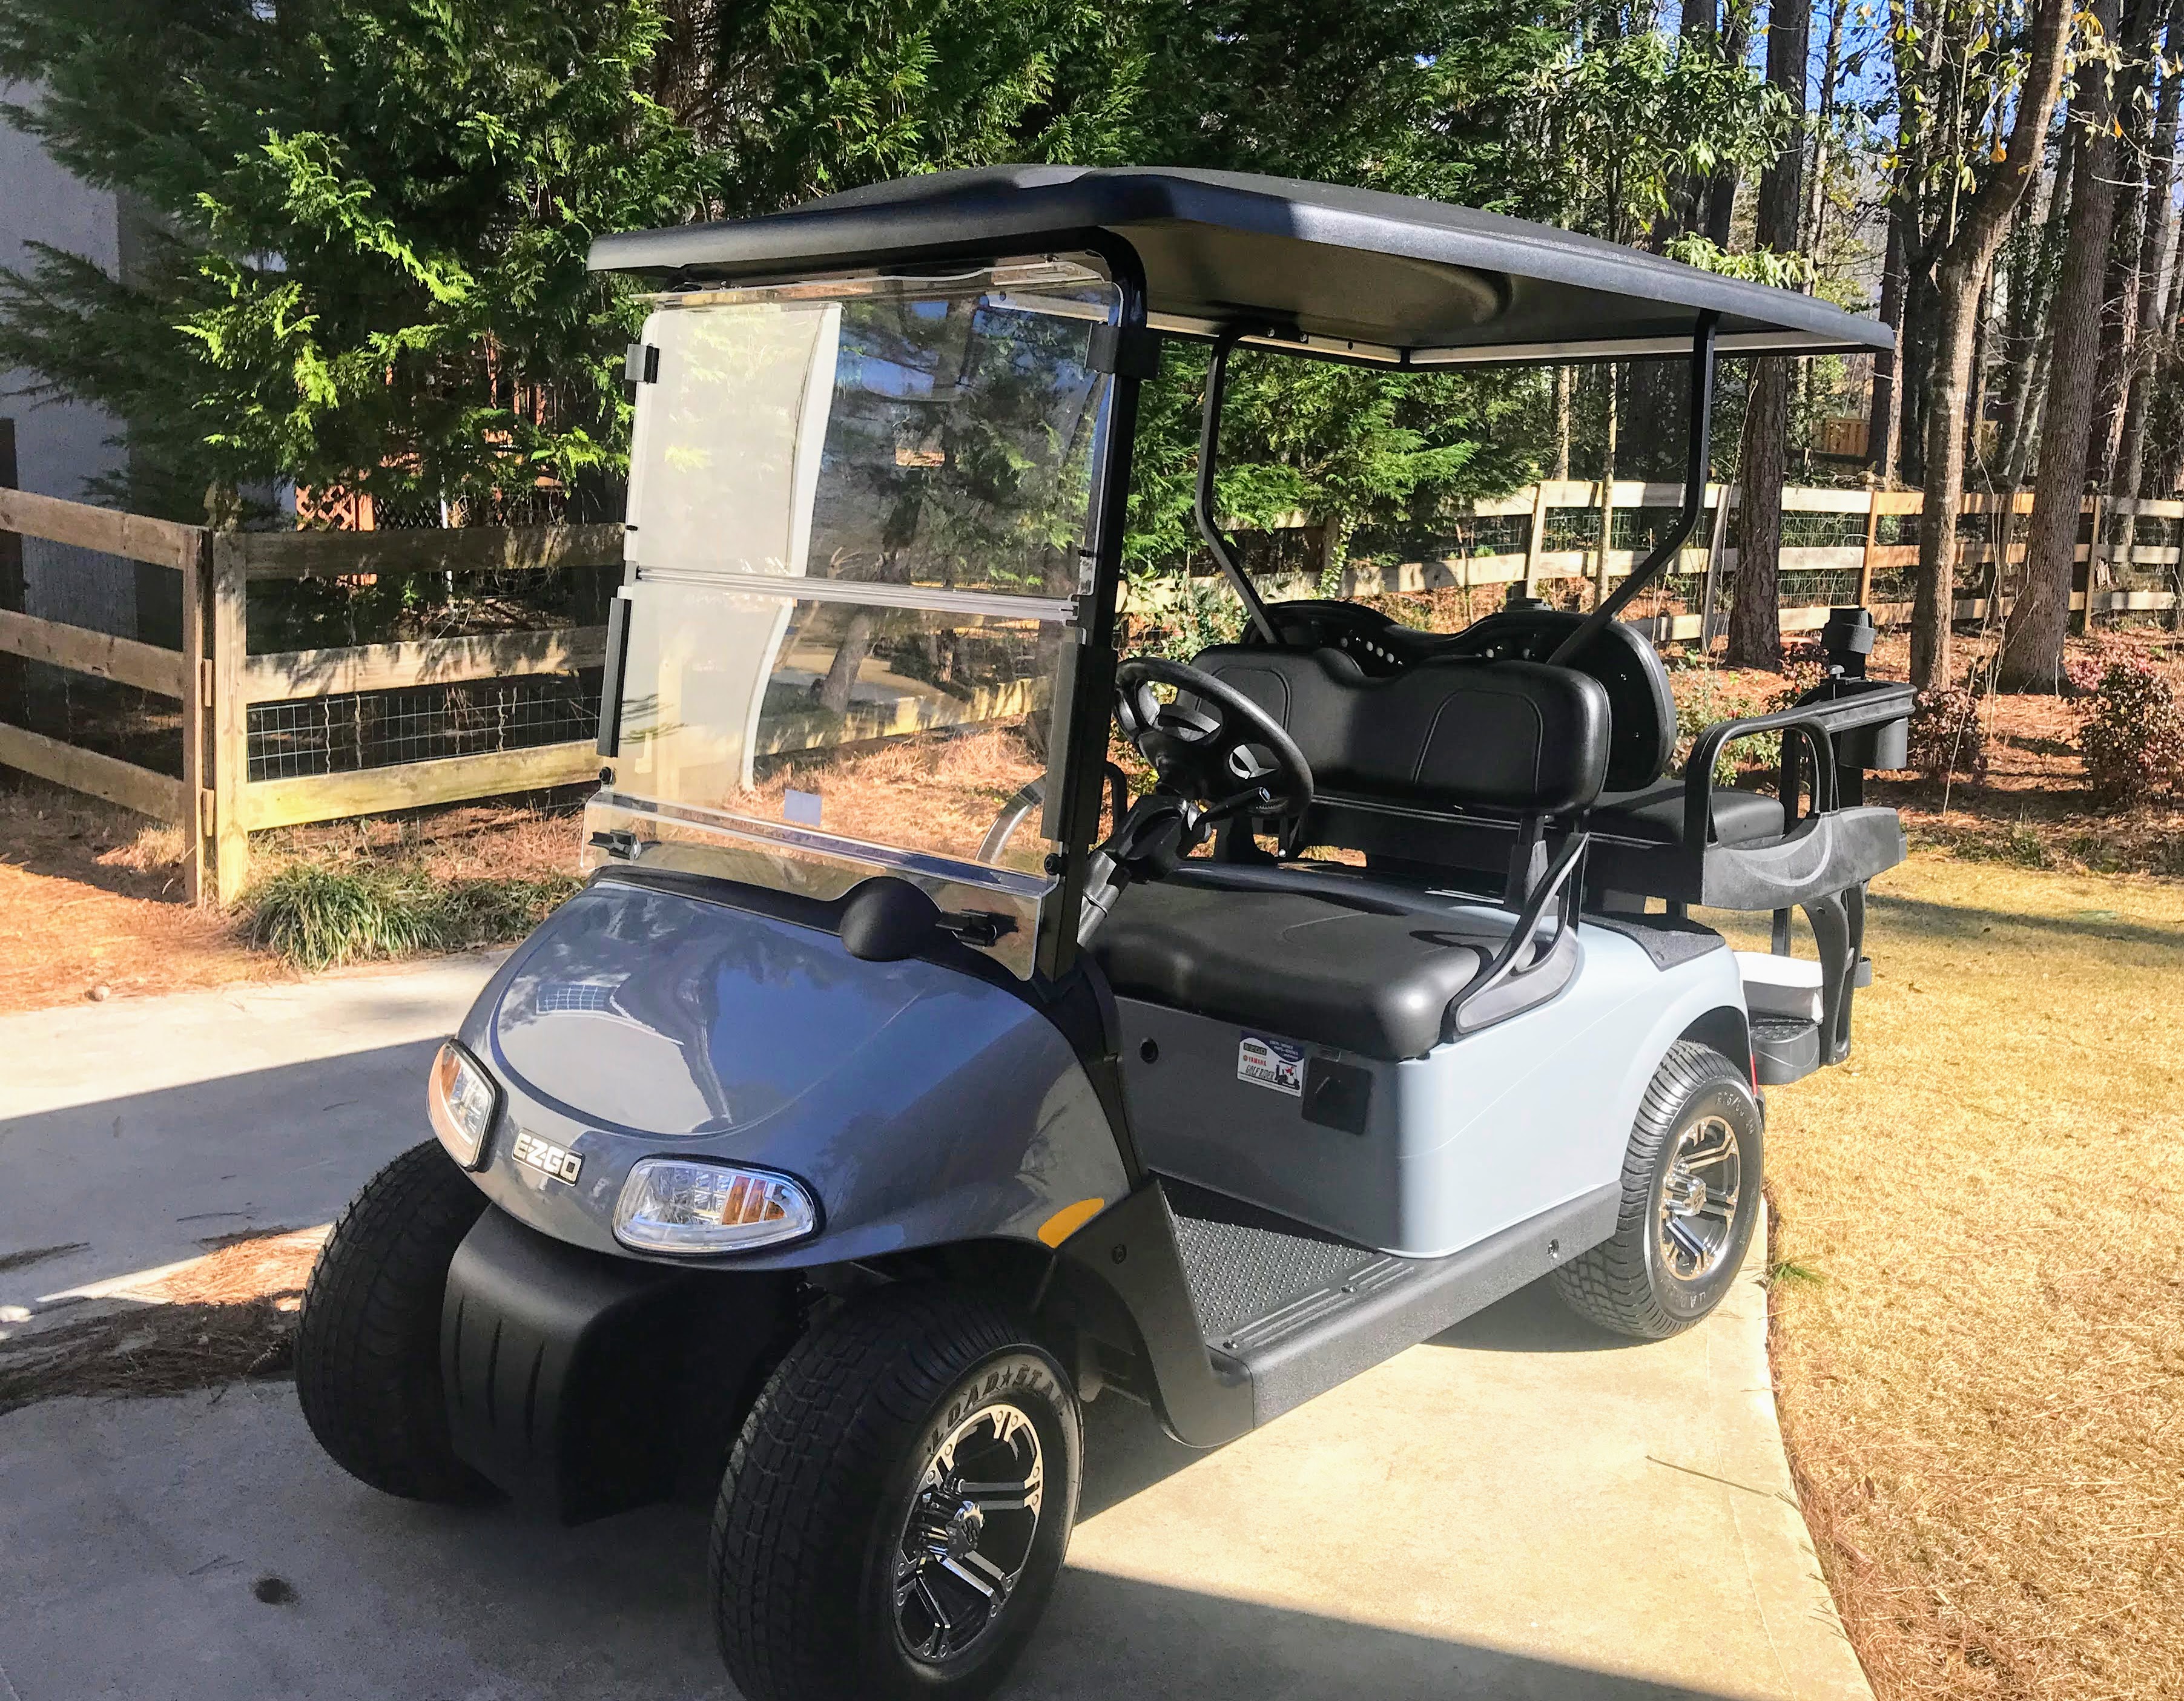 EZ GO RXV golf cart